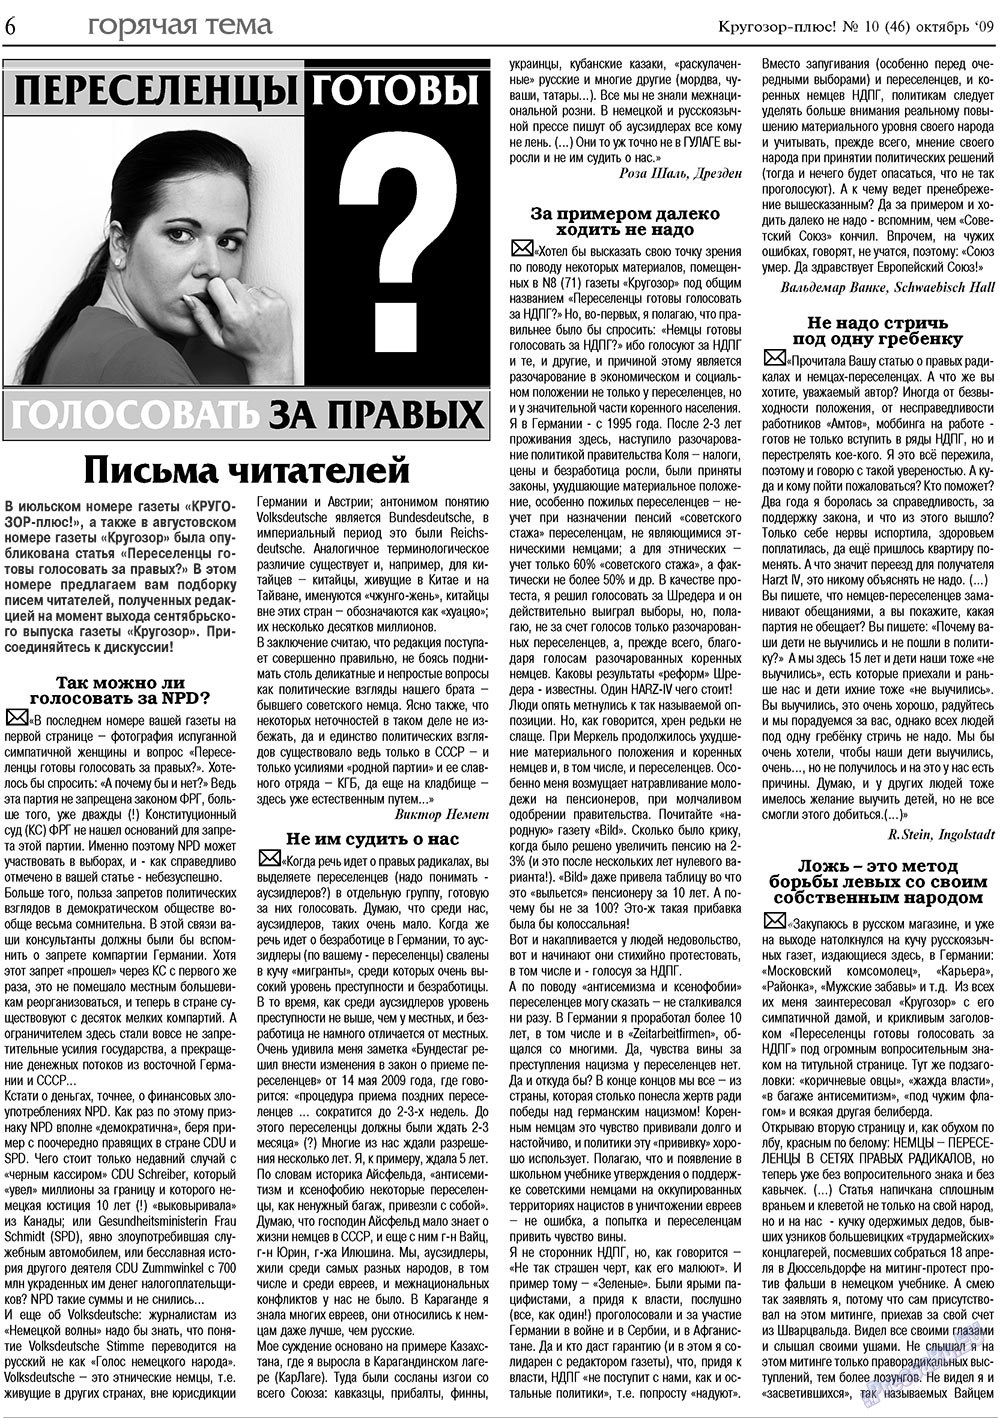 Кругозор плюс! (газета). 2009 год, номер 10, стр. 6